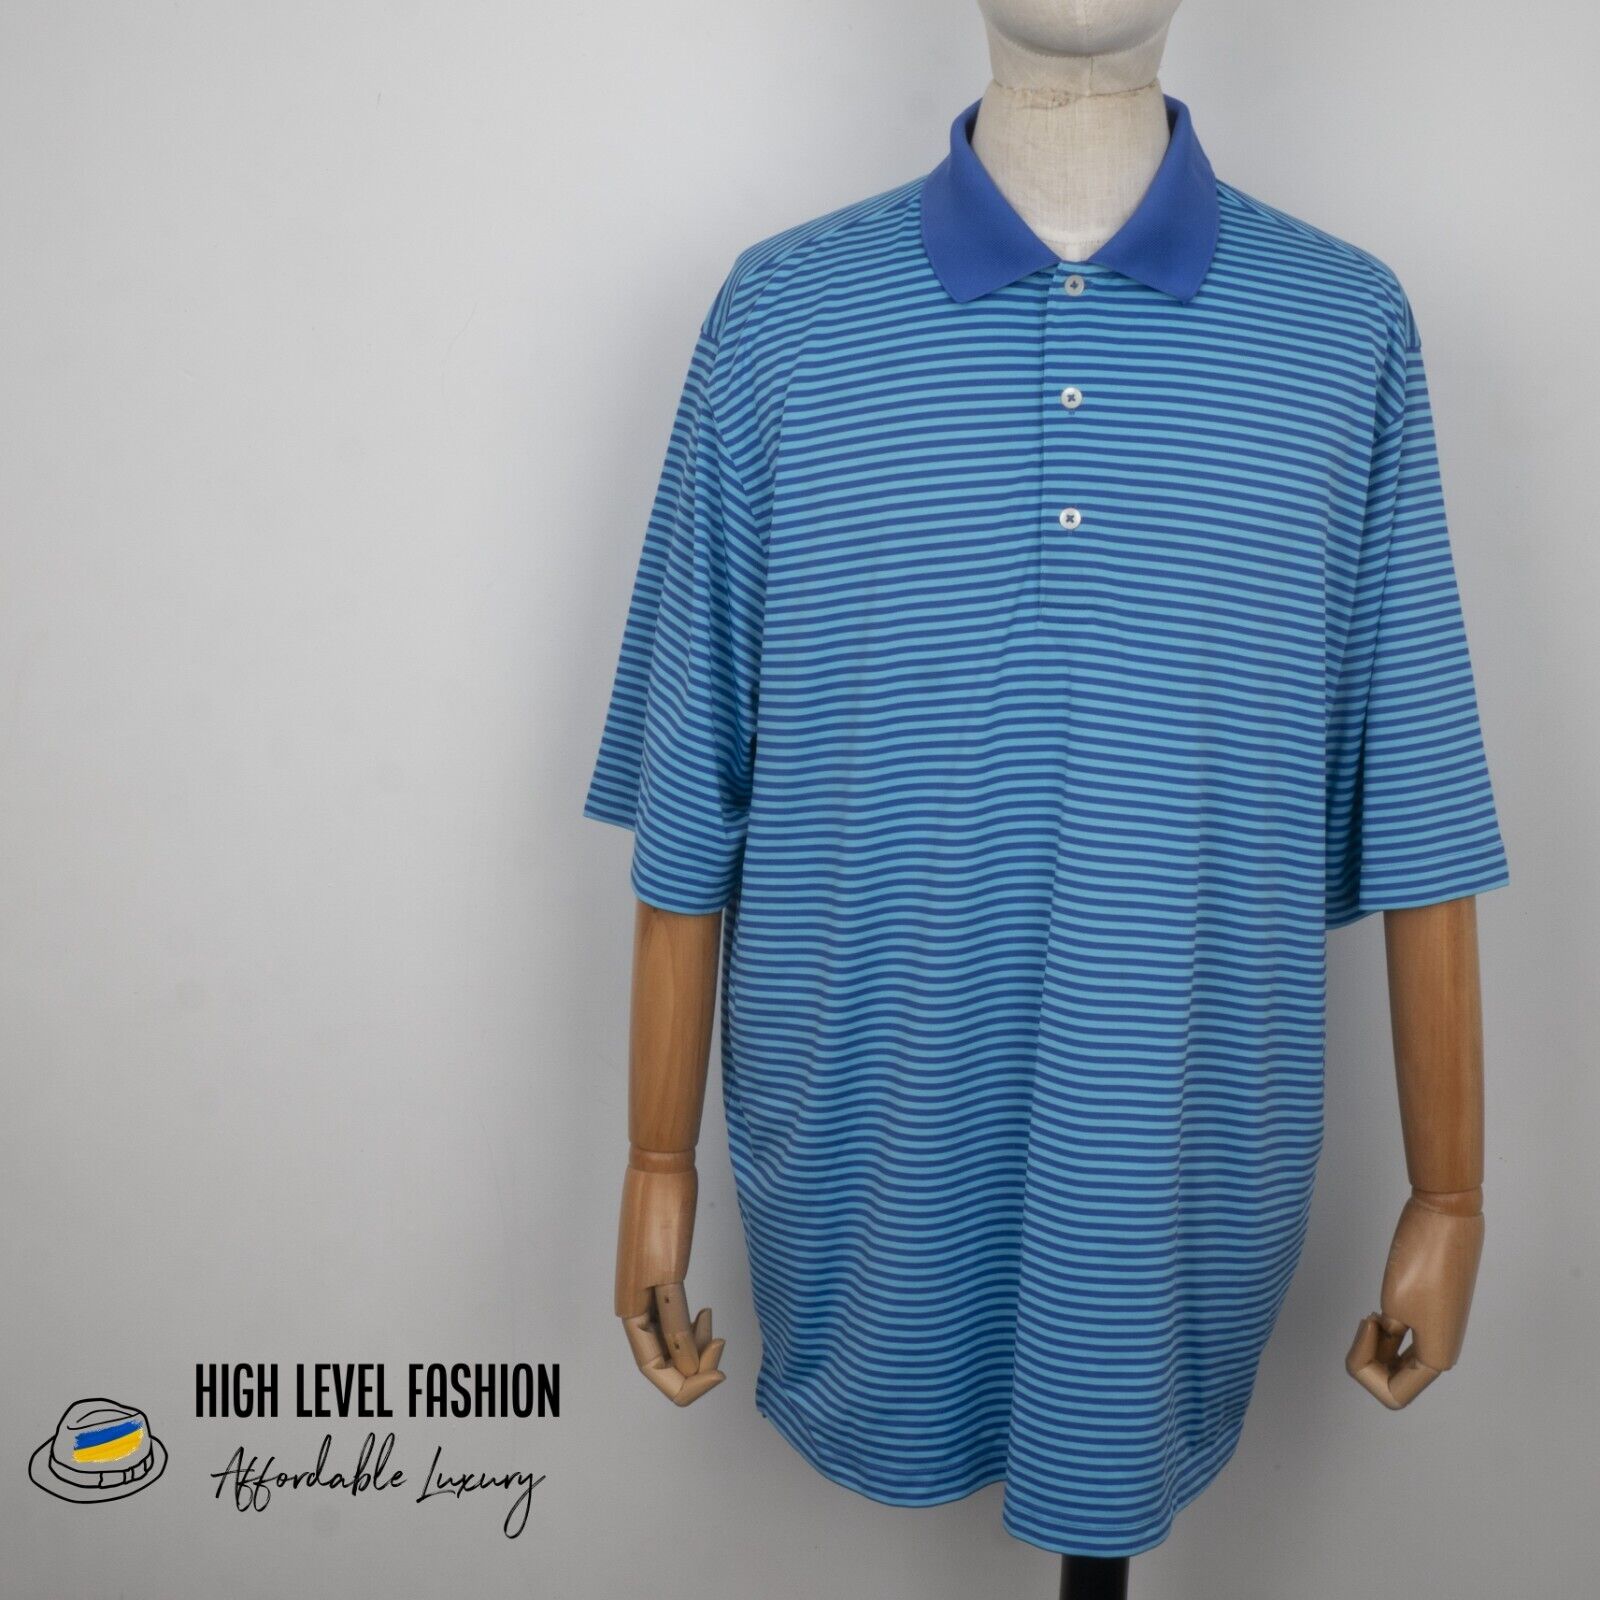 DONALD ROSS Men's Golf Blue Collared Short Sleeve Striped Polo T-Shirt Size XL